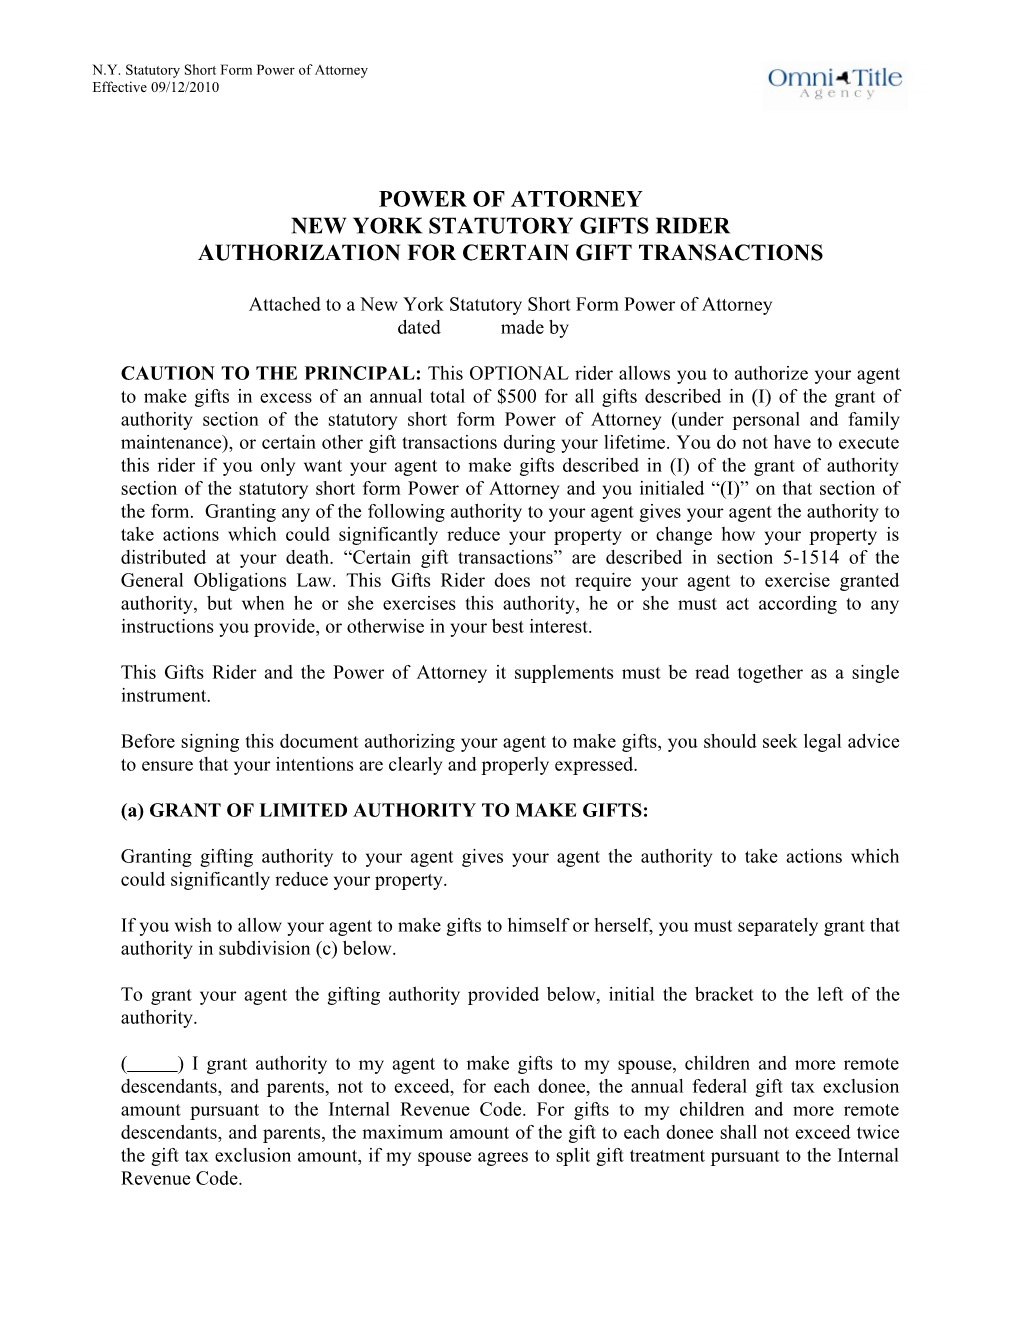 Power of Attorney New York Statutory Short Form - Effective 9/12/10